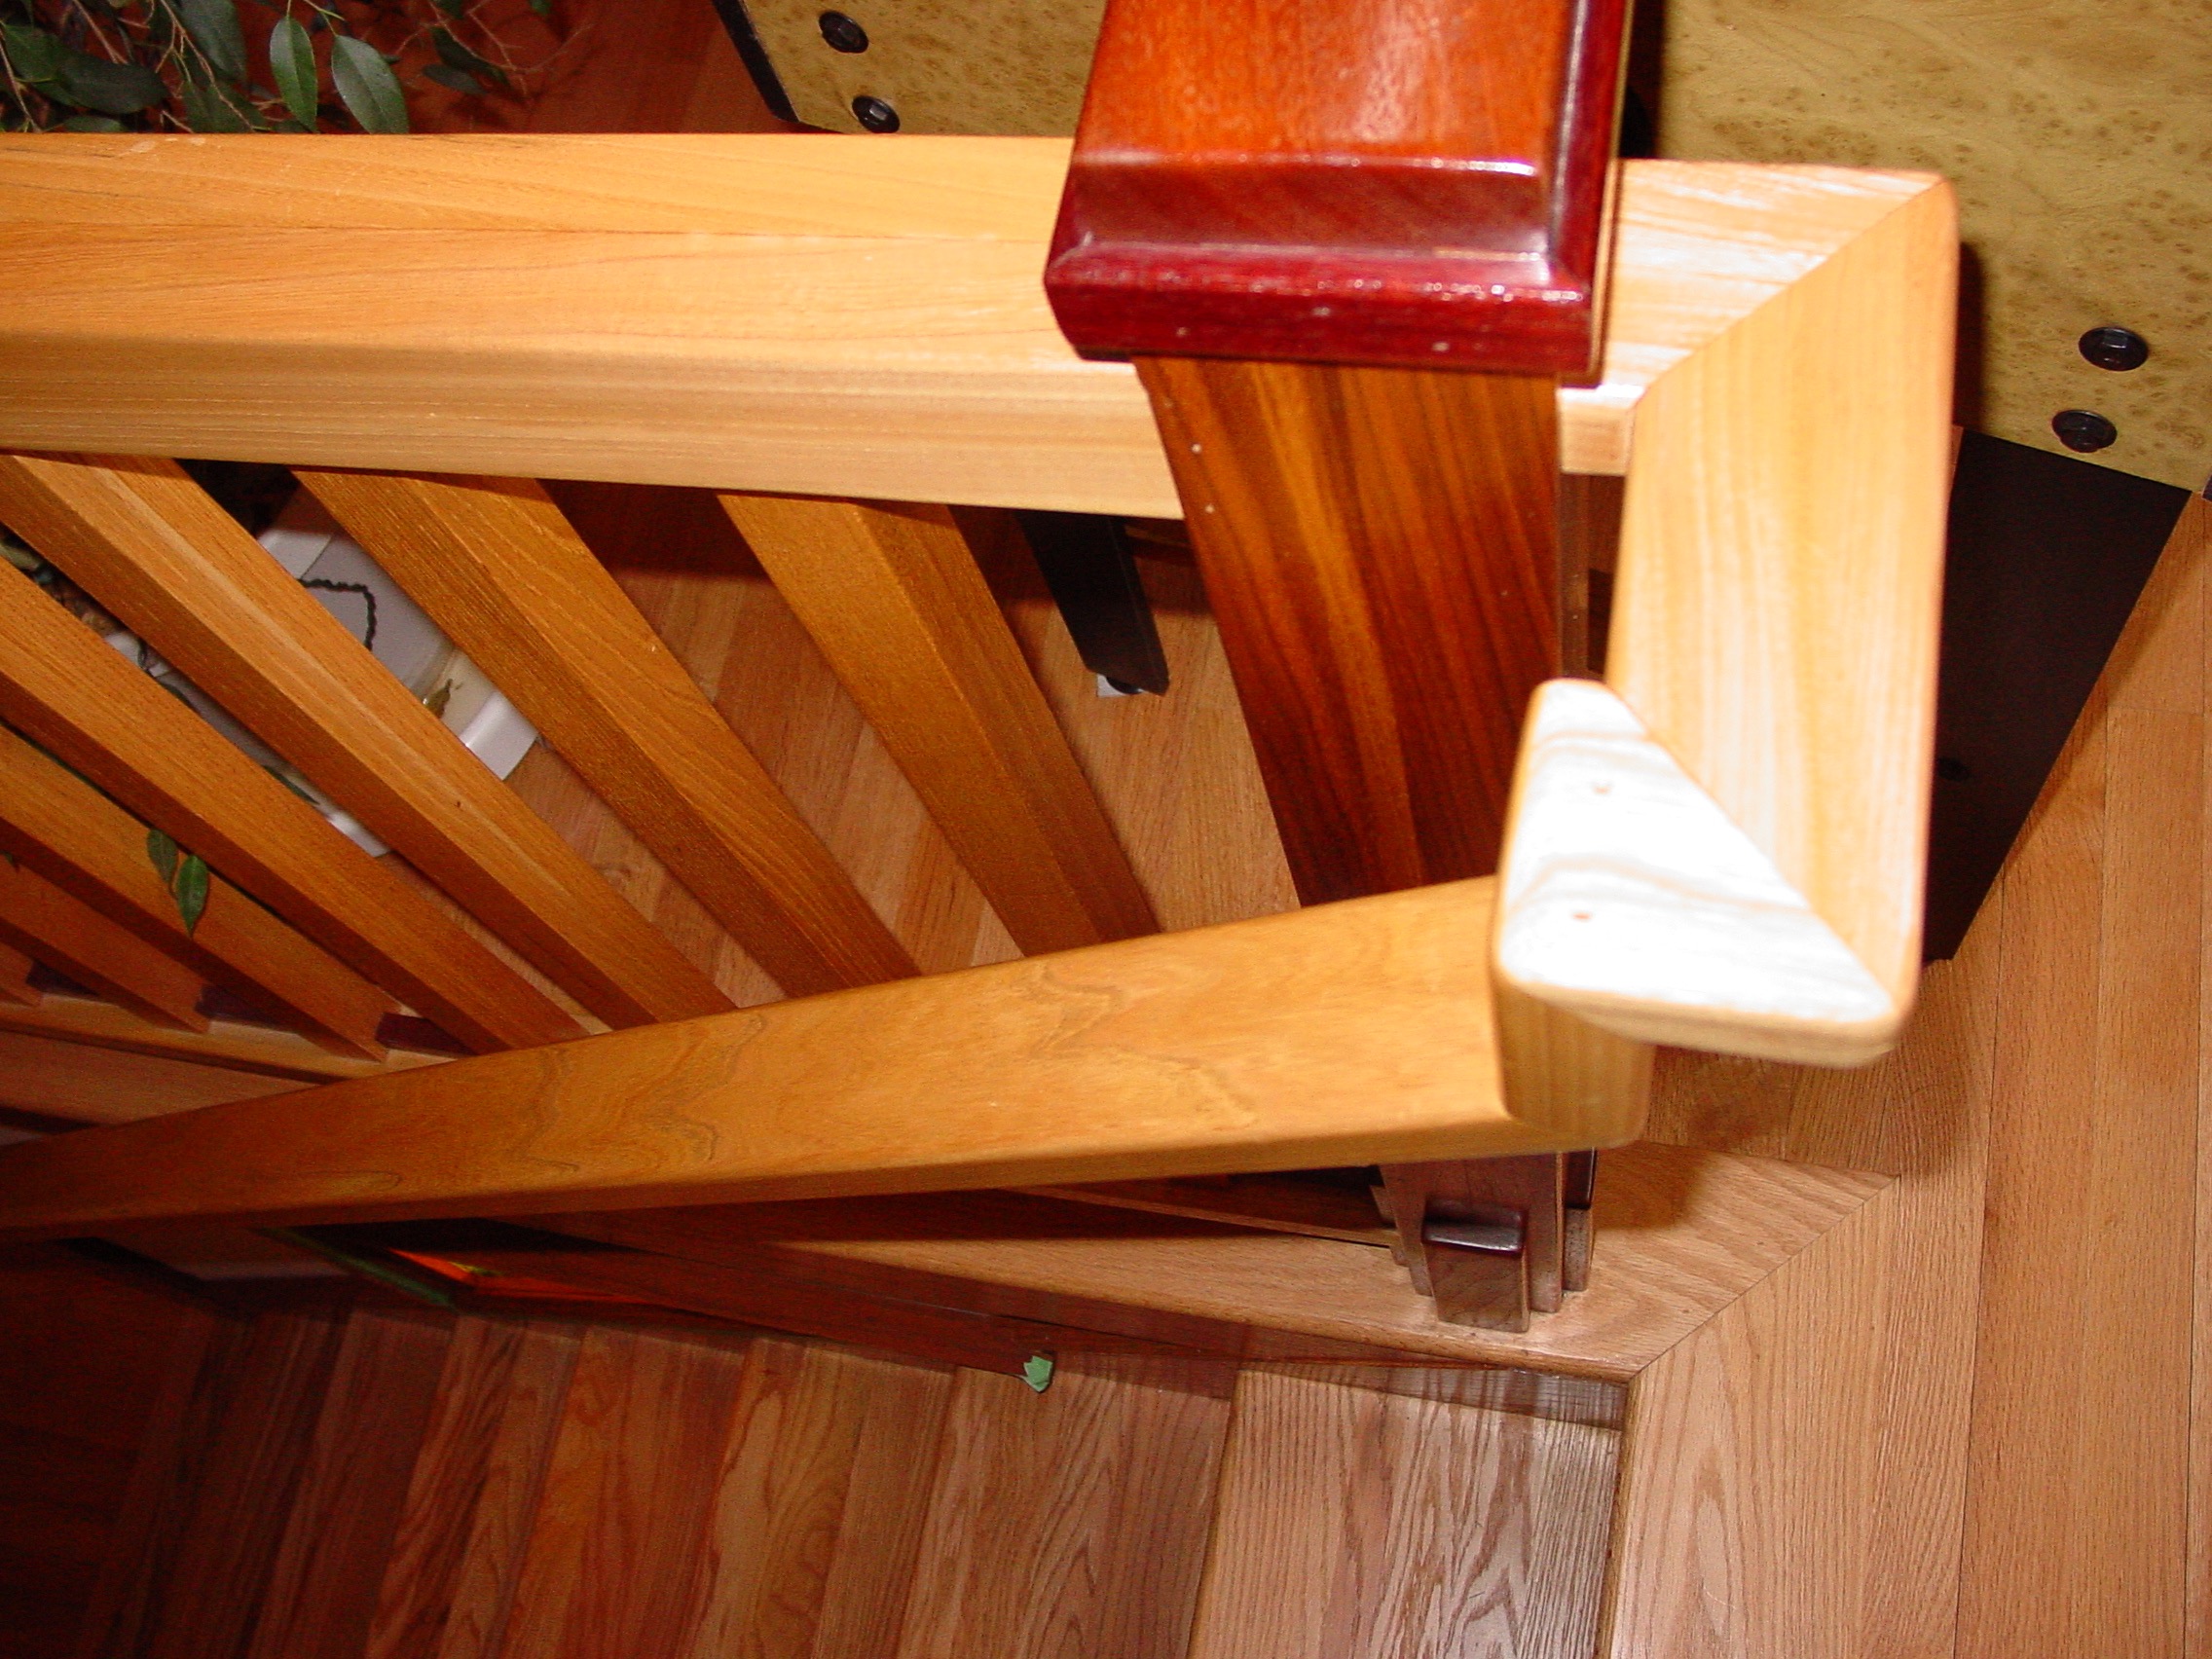 Handrail newel post